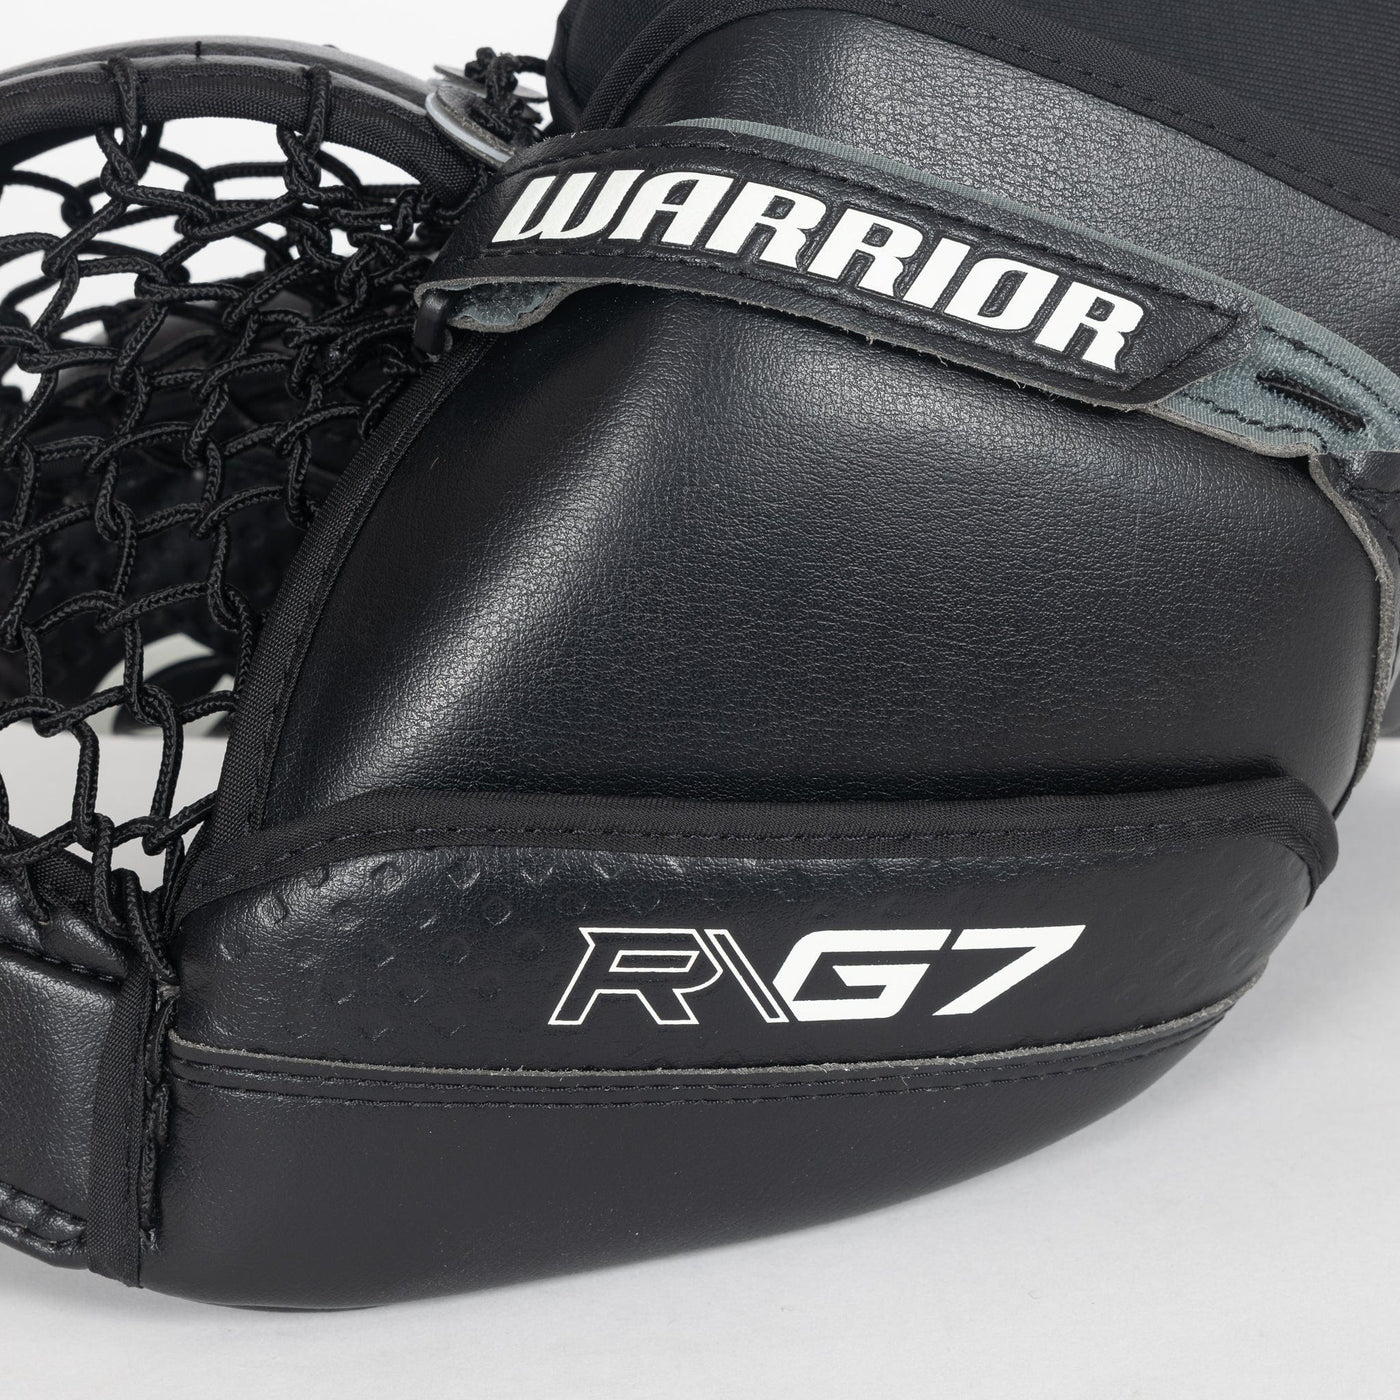 Warrior RTL G7 Senior Goalie Catcher - TheHockeyShop.com